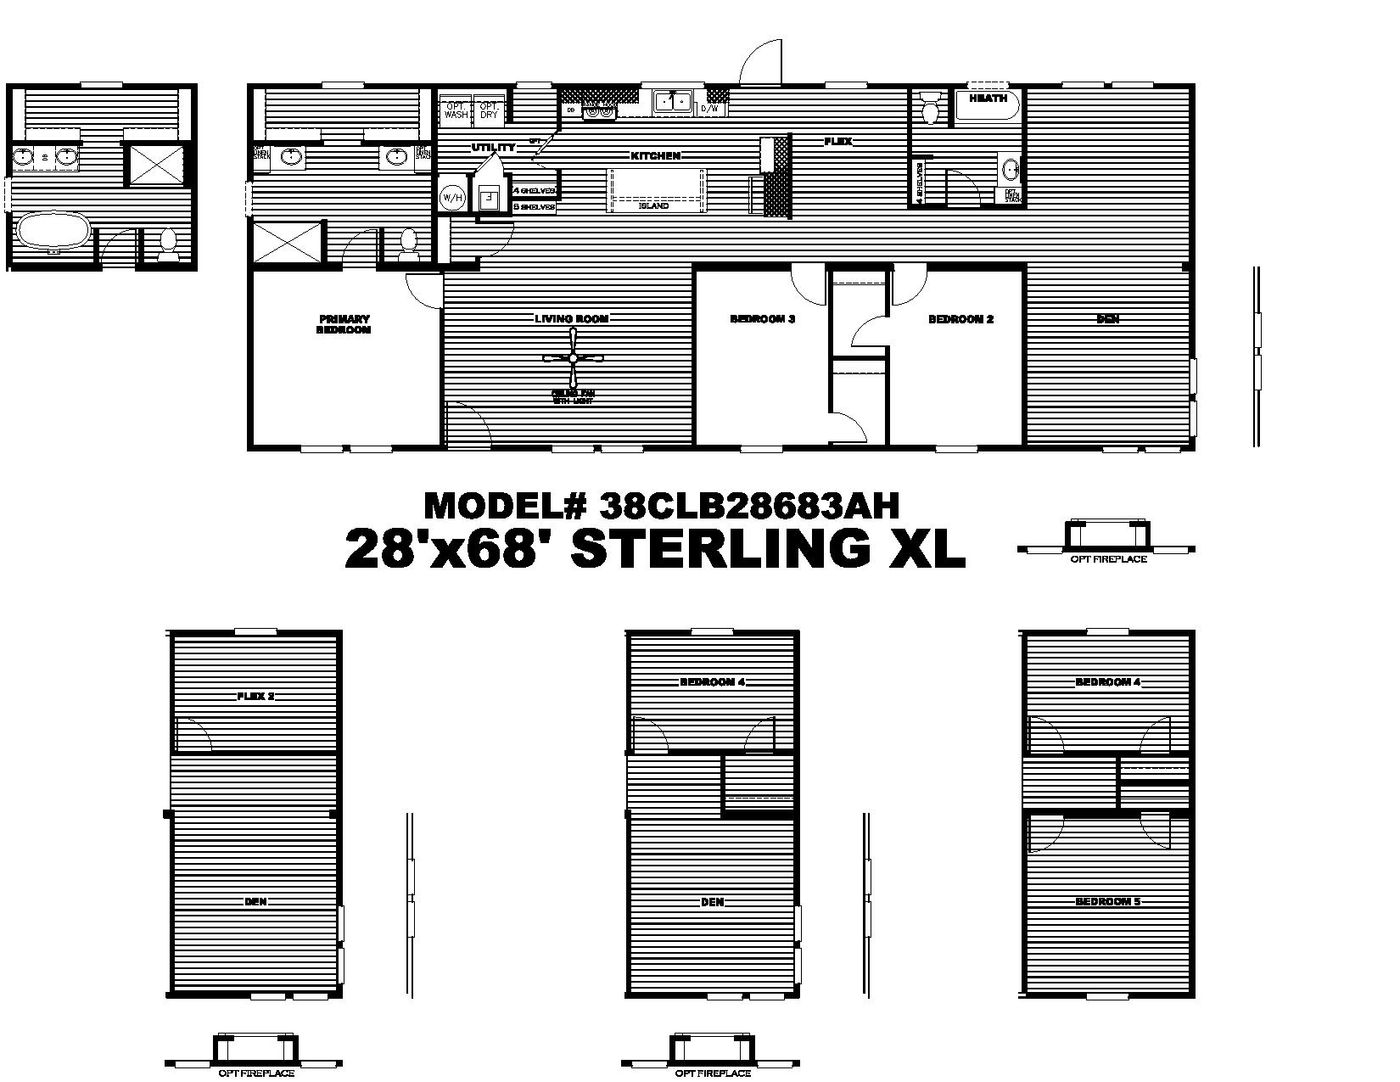 The Sterling XL Anniversary Floor Plan